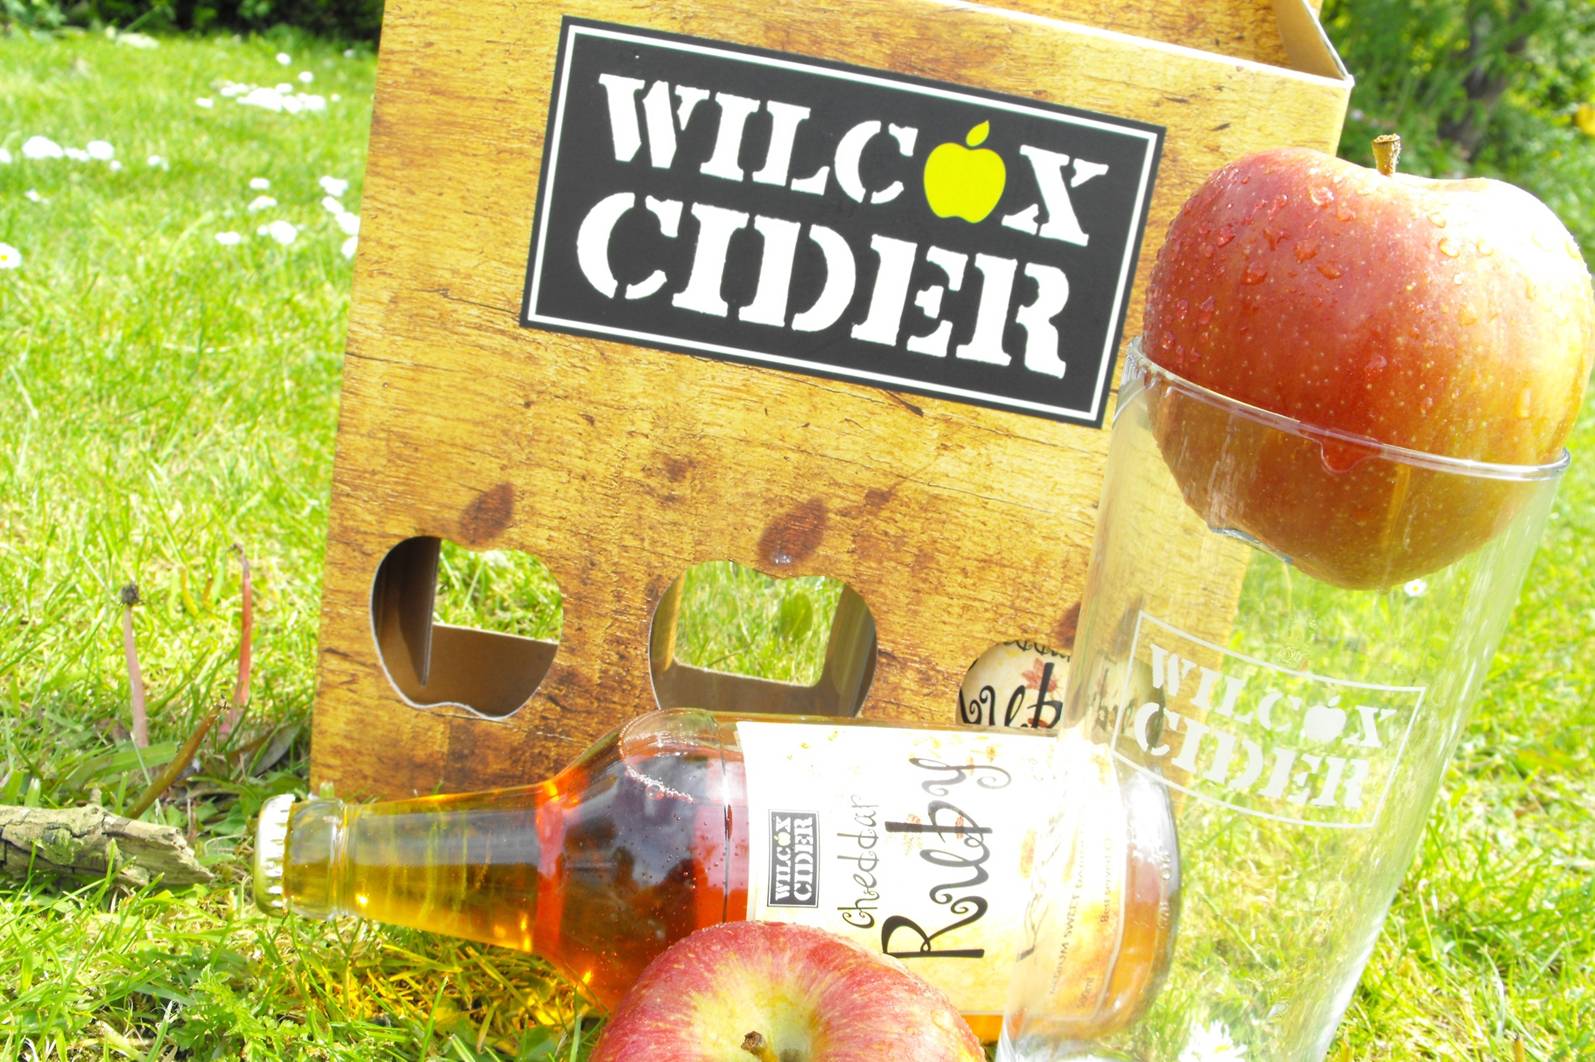 cider case with bottles, apples in garden